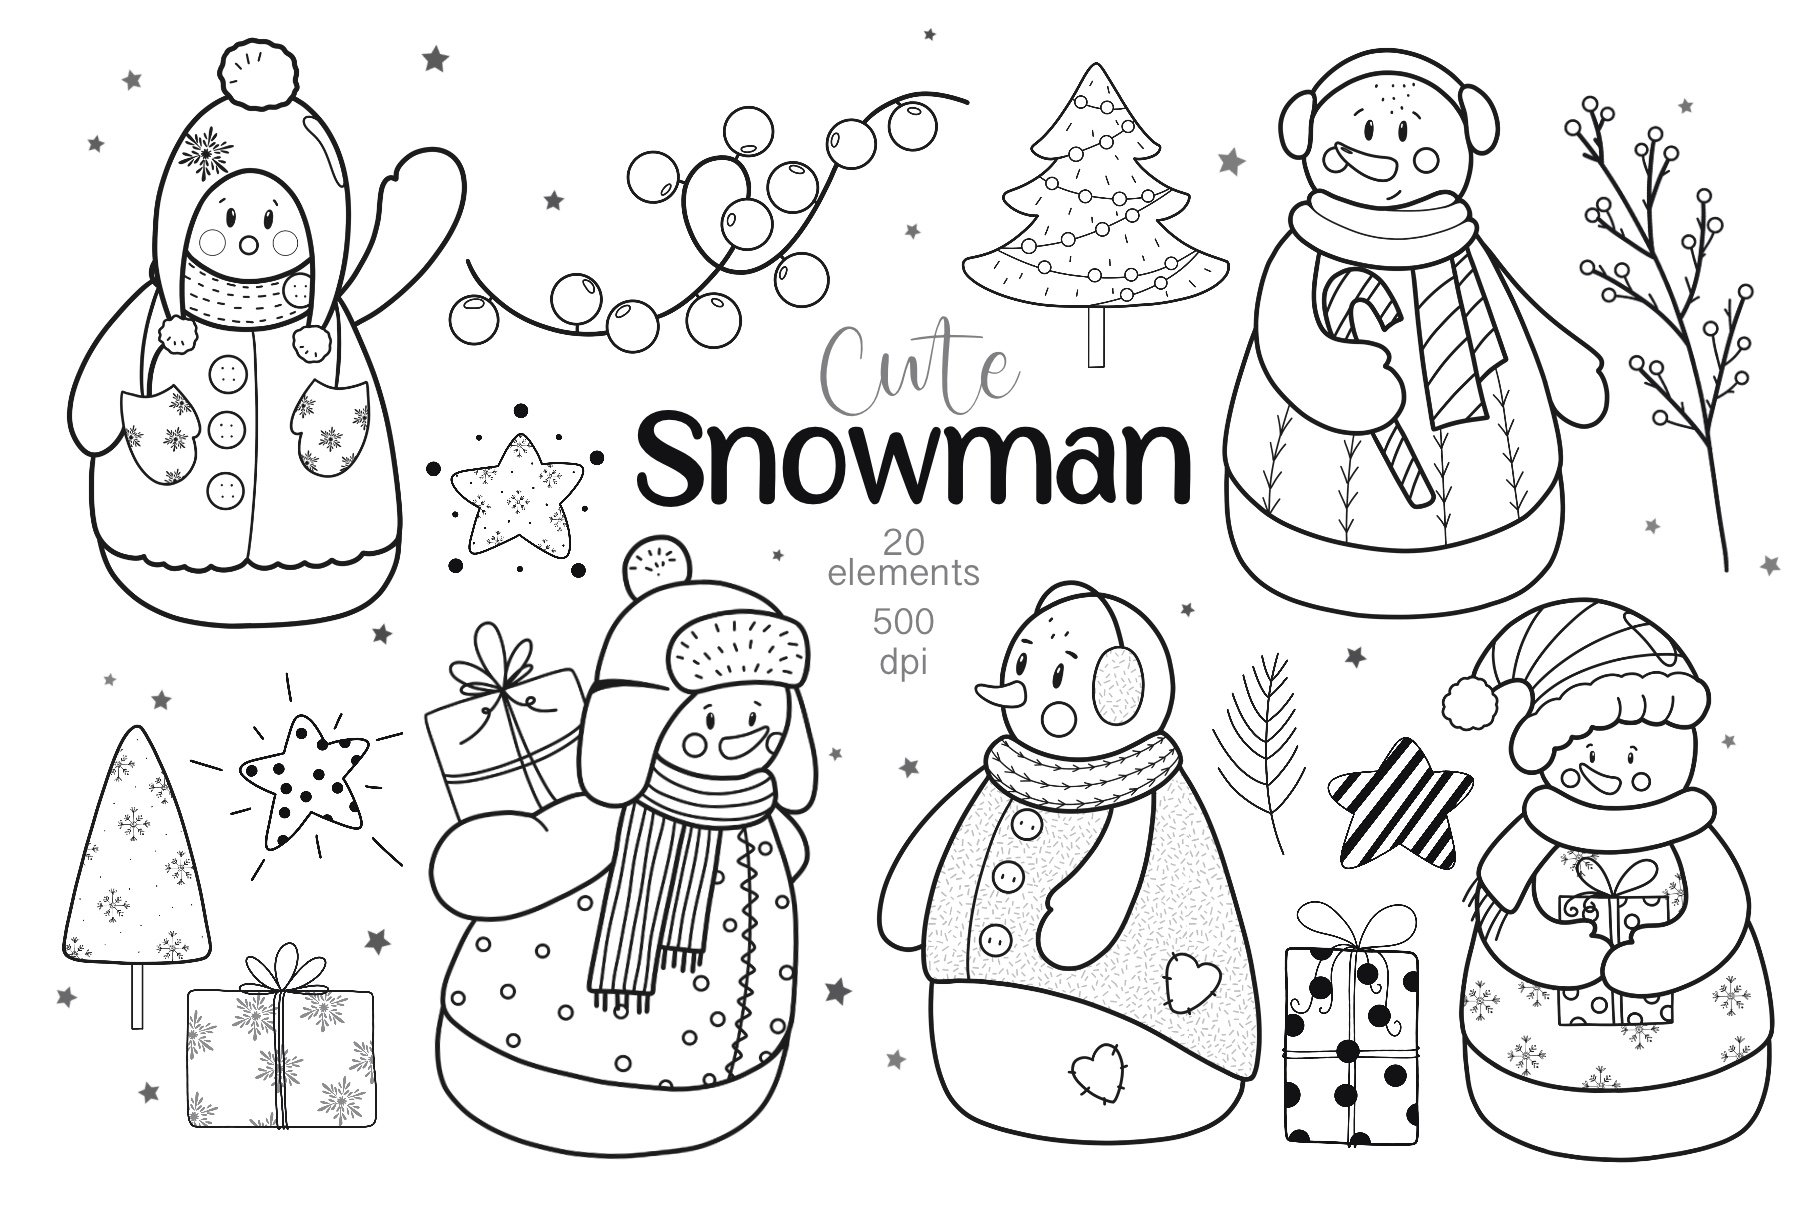 Build your own Snowman kit - Lisa Glanz